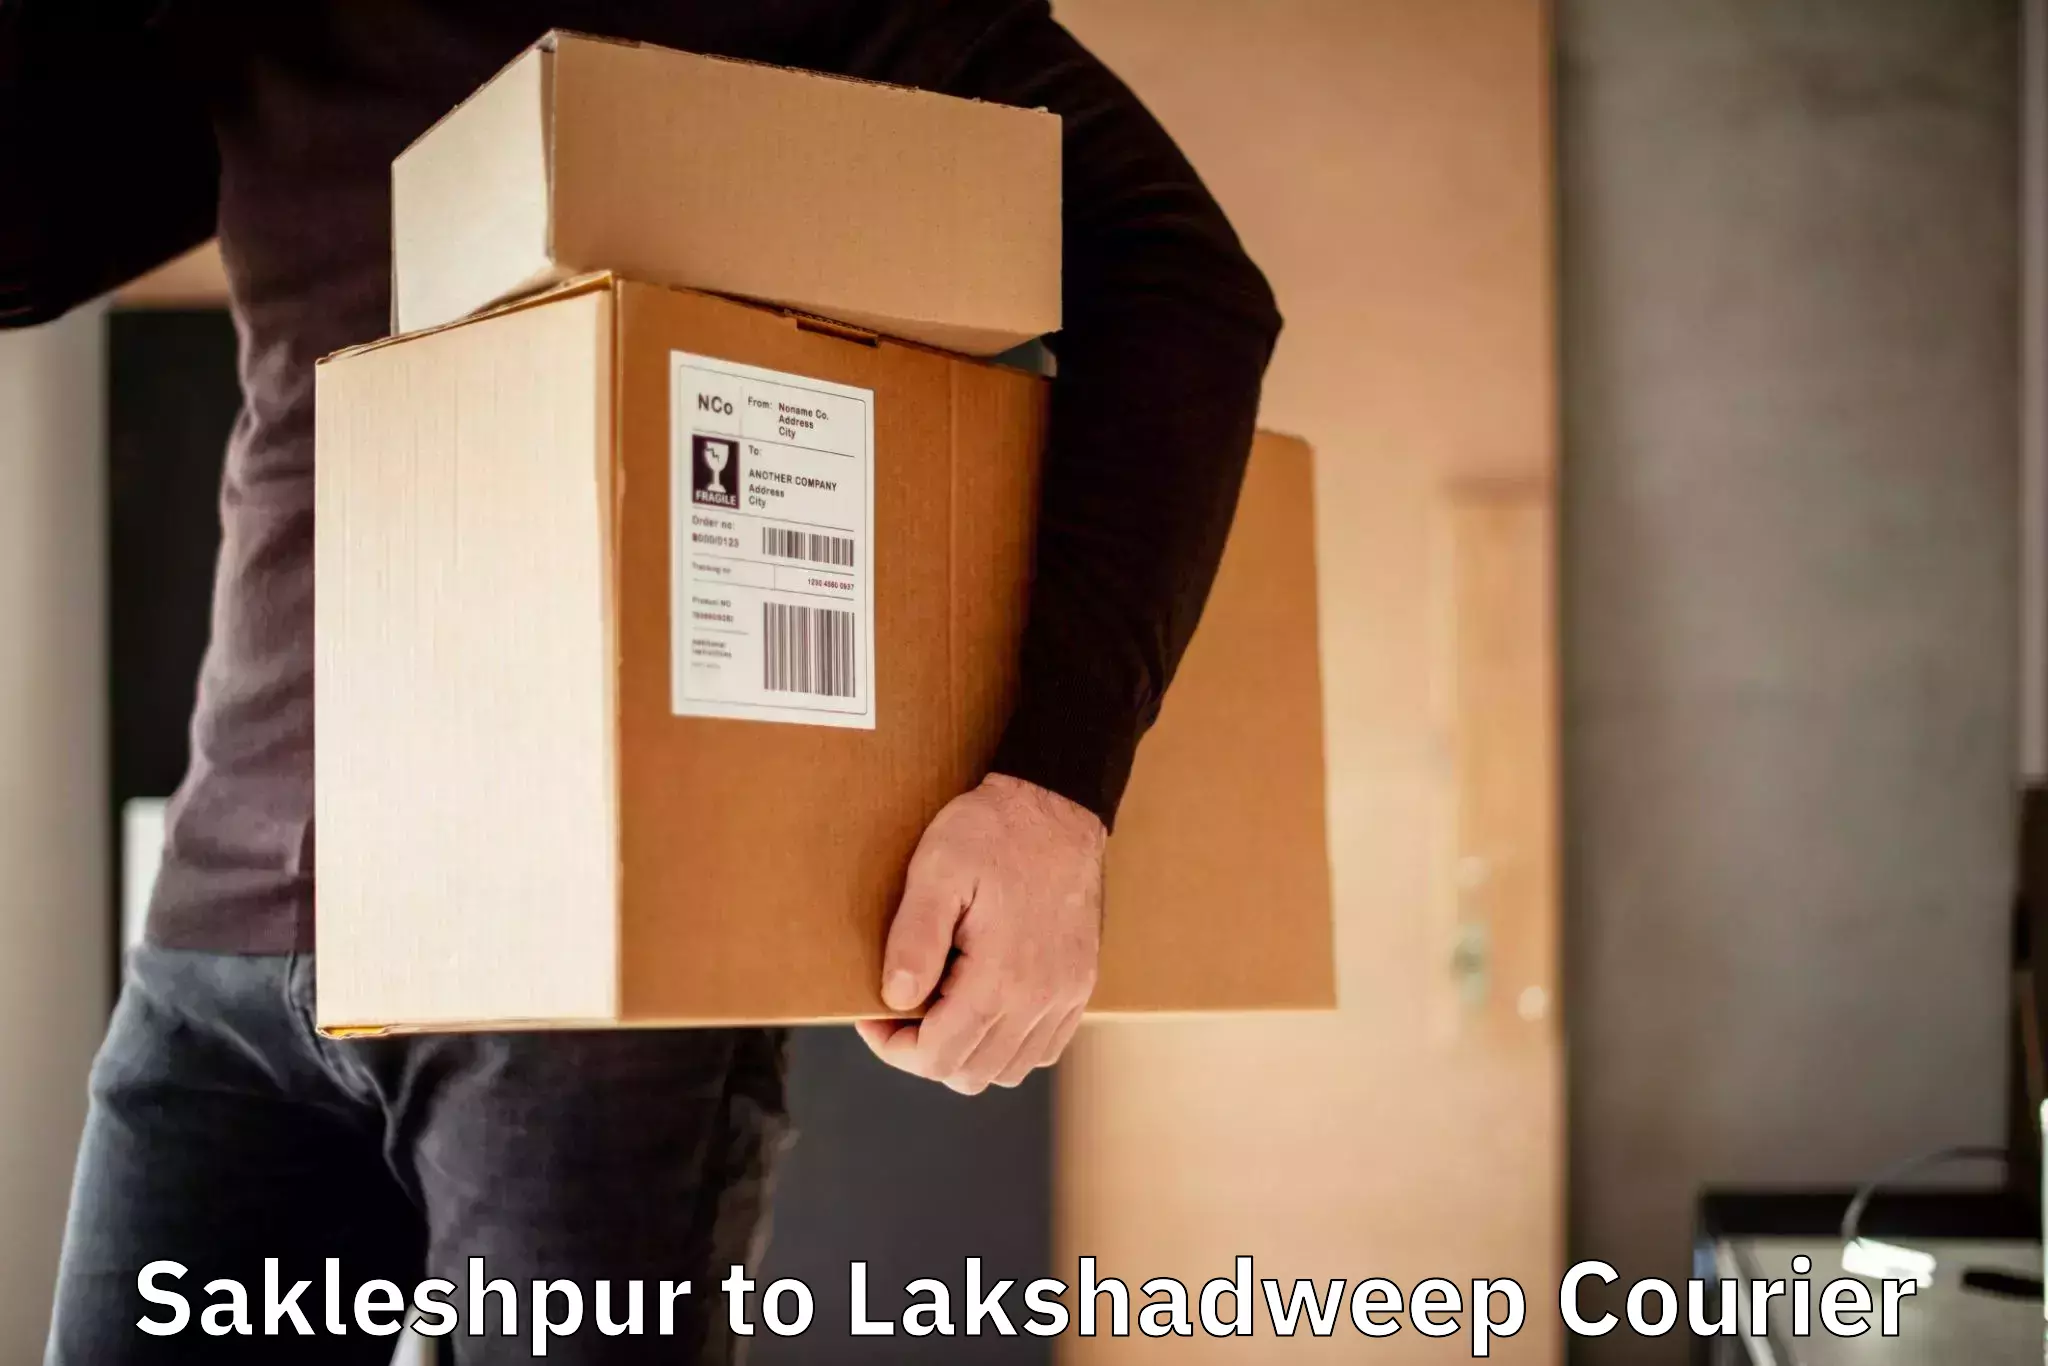 Courier service booking in Sakleshpur to Lakshadweep